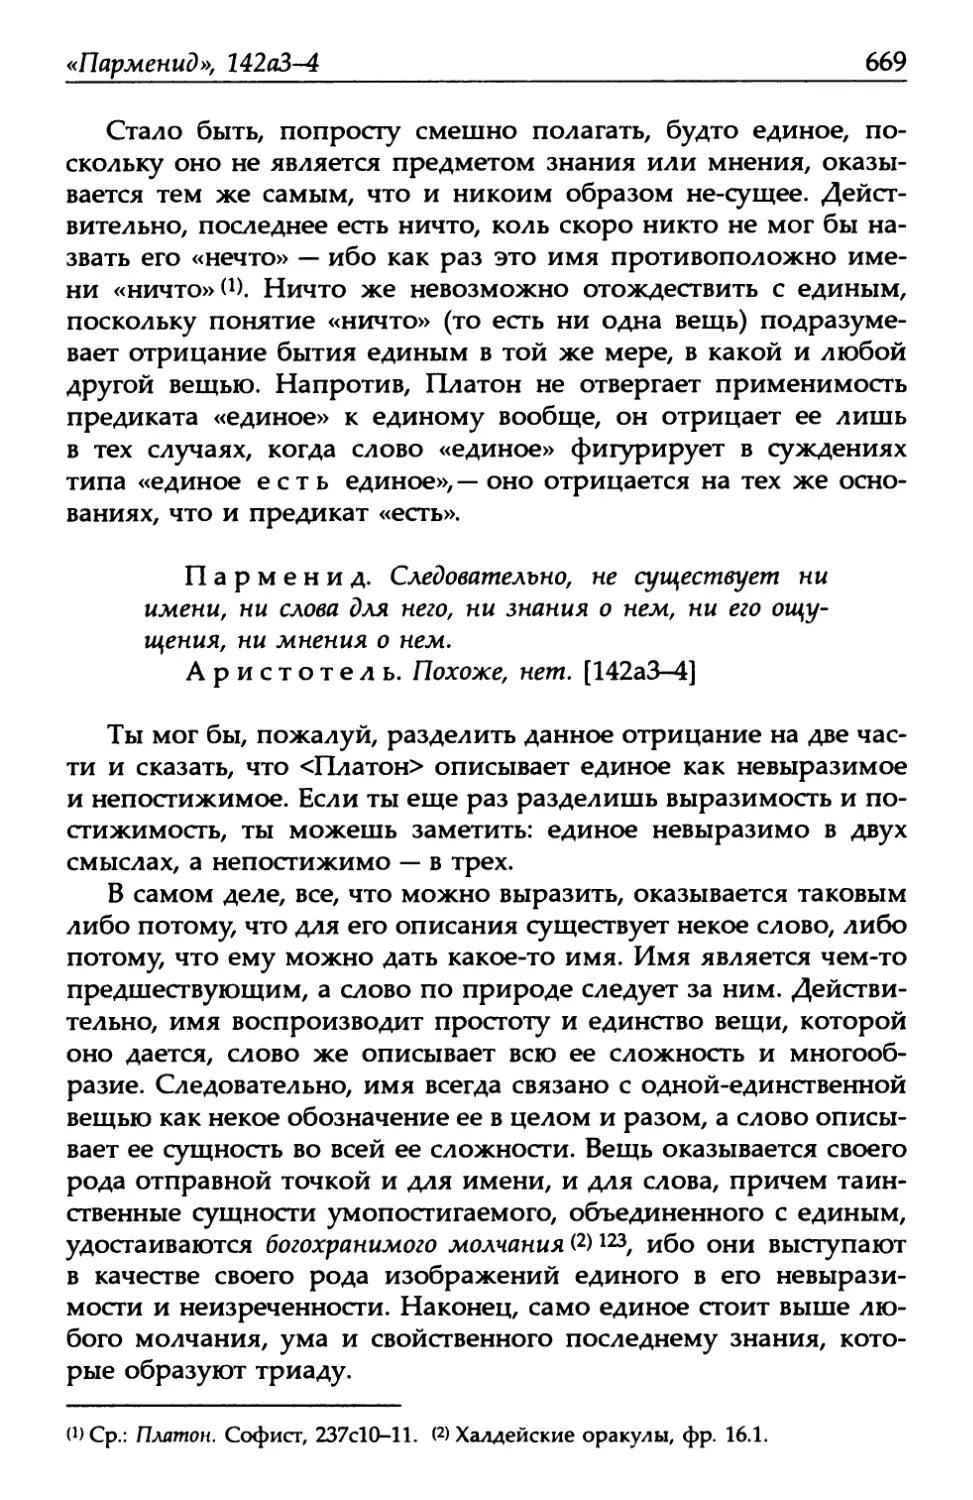 «Парменид», 142а3-4